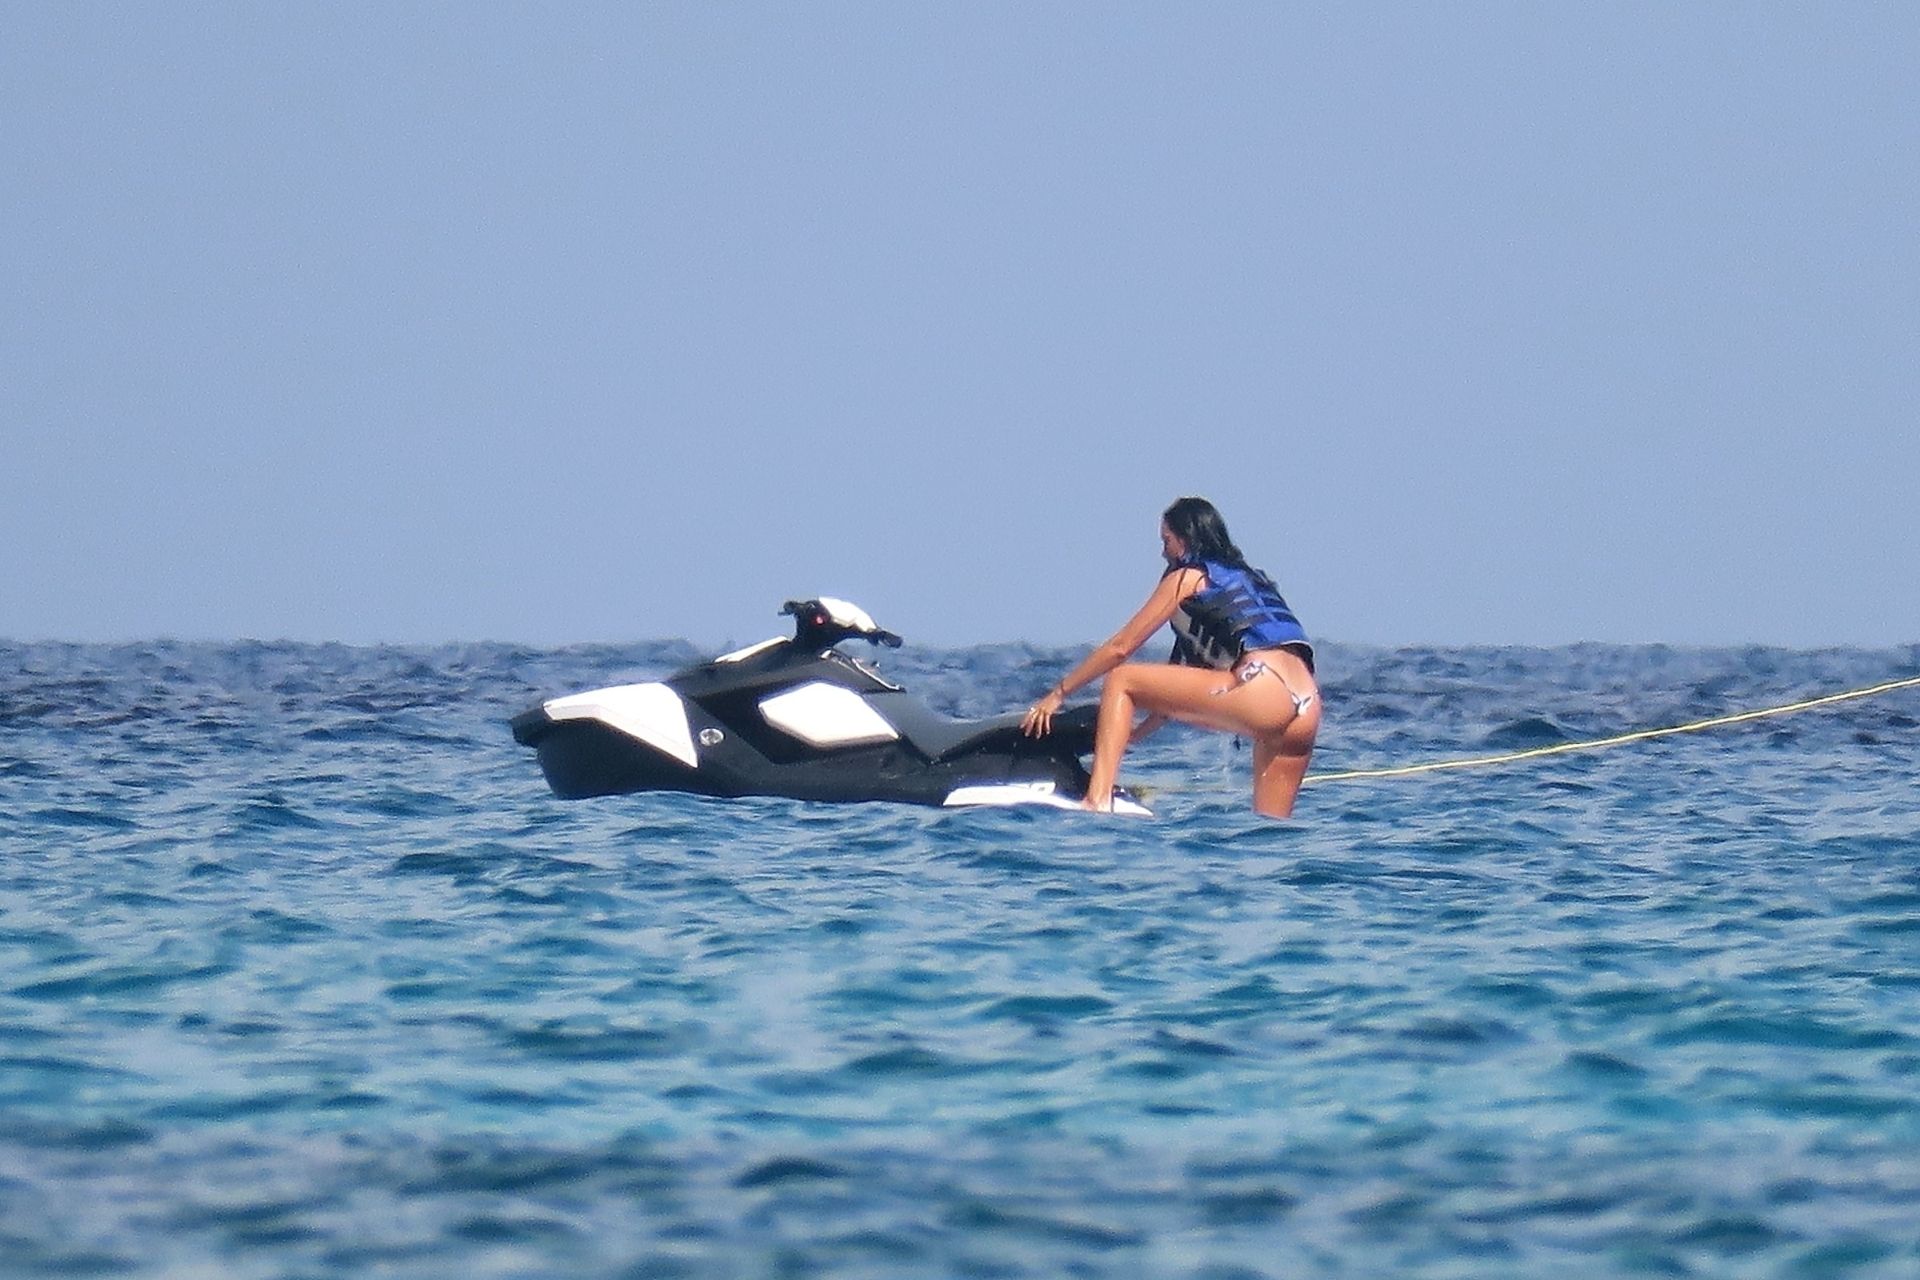 Paulo Dybala & Oriana Sabatini Enjoy Their Holiday in Formentera (45 Photos)